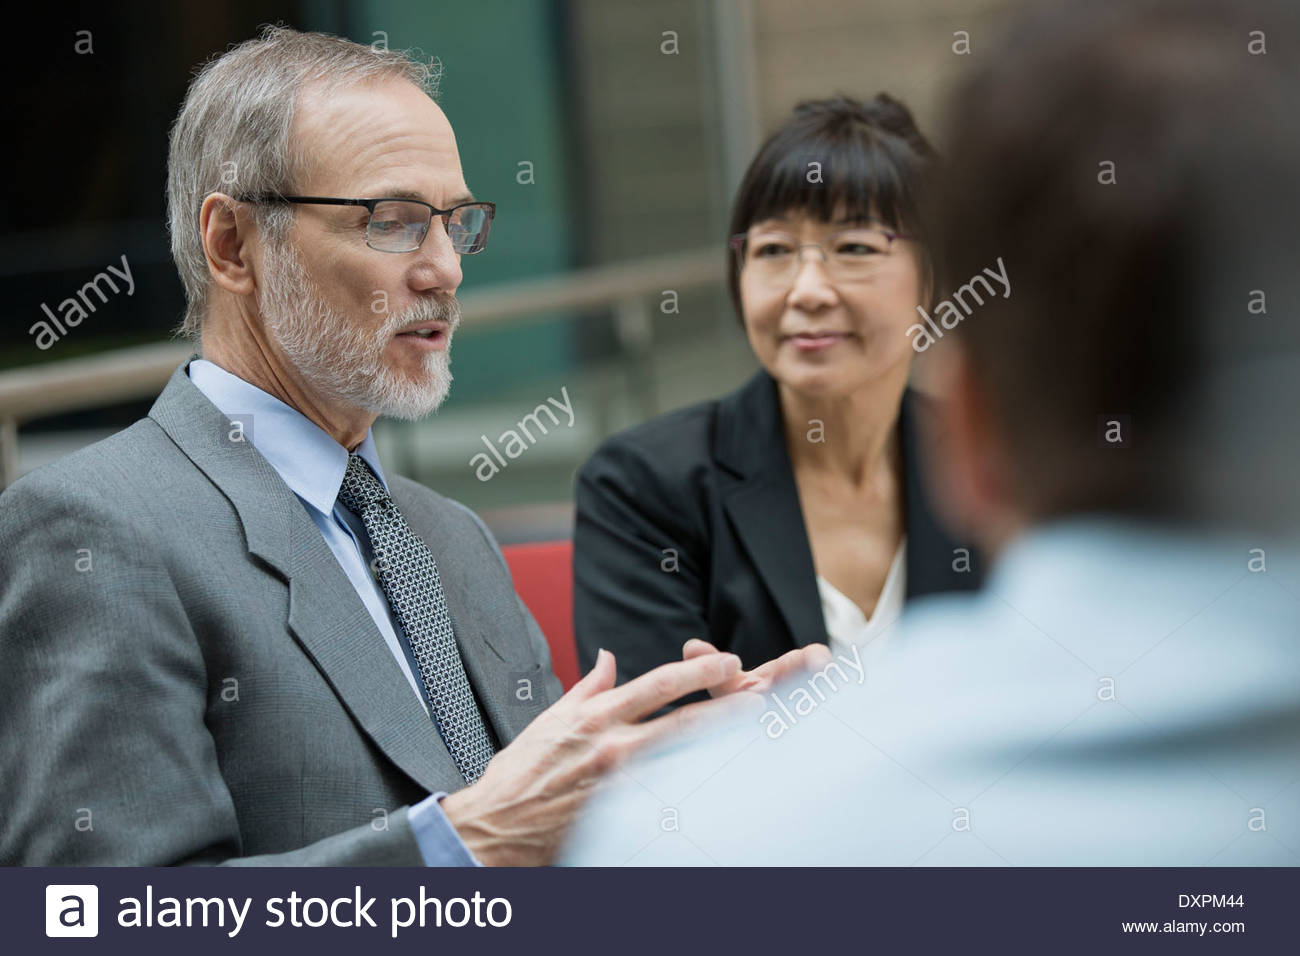 Businessman gesturing in meeting Stock Photo